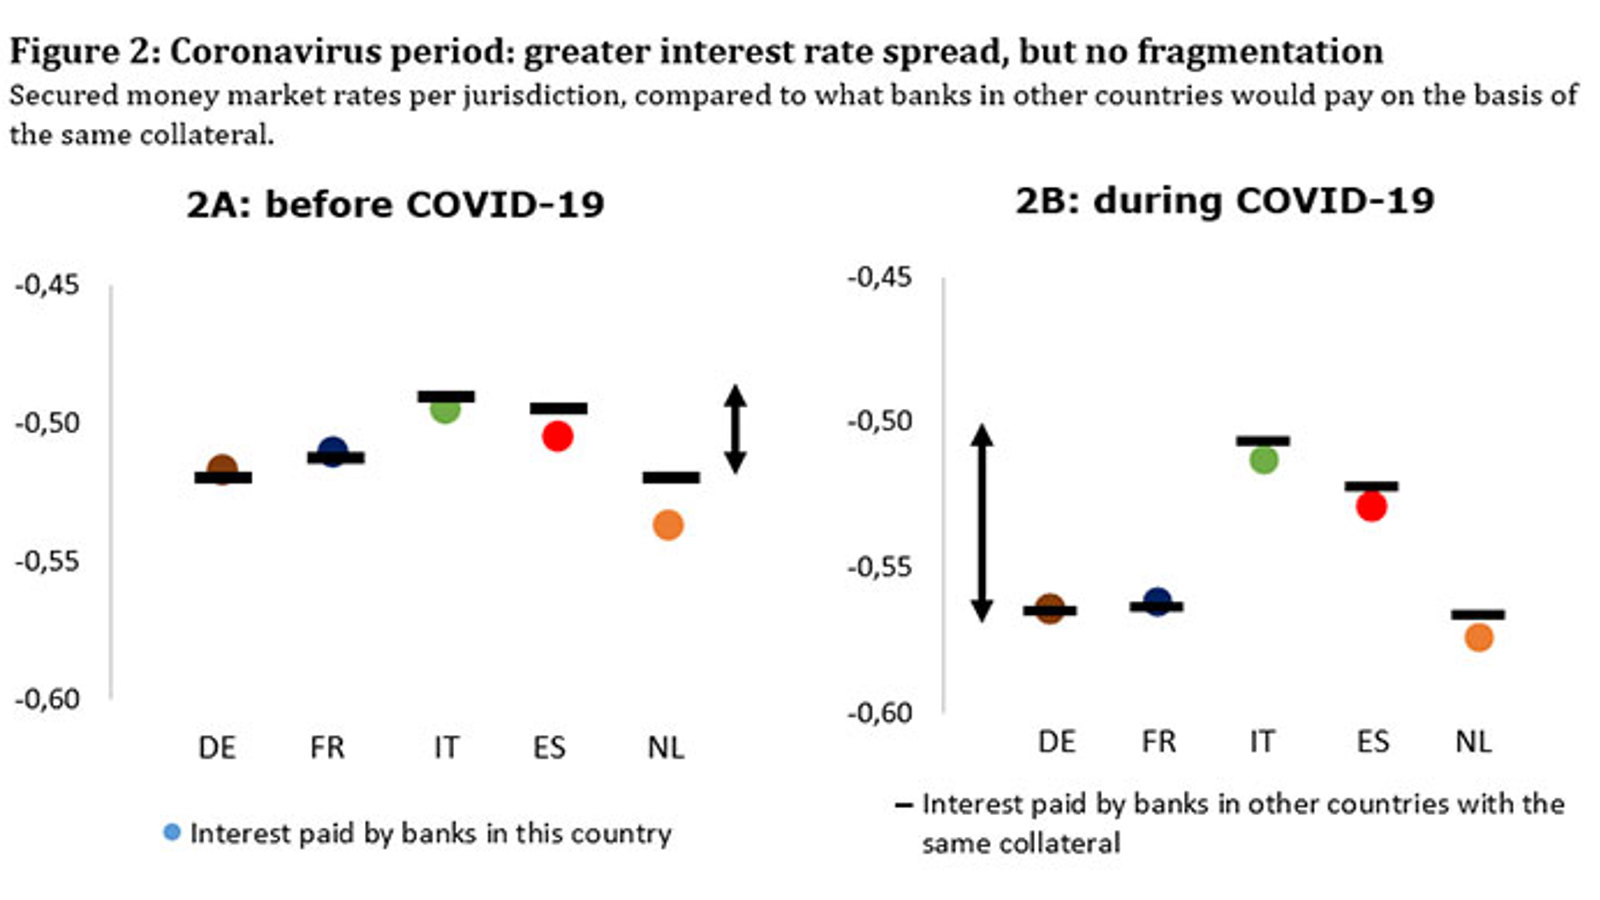 Coronavirus period: greater interest rate spread, but no fragmentation